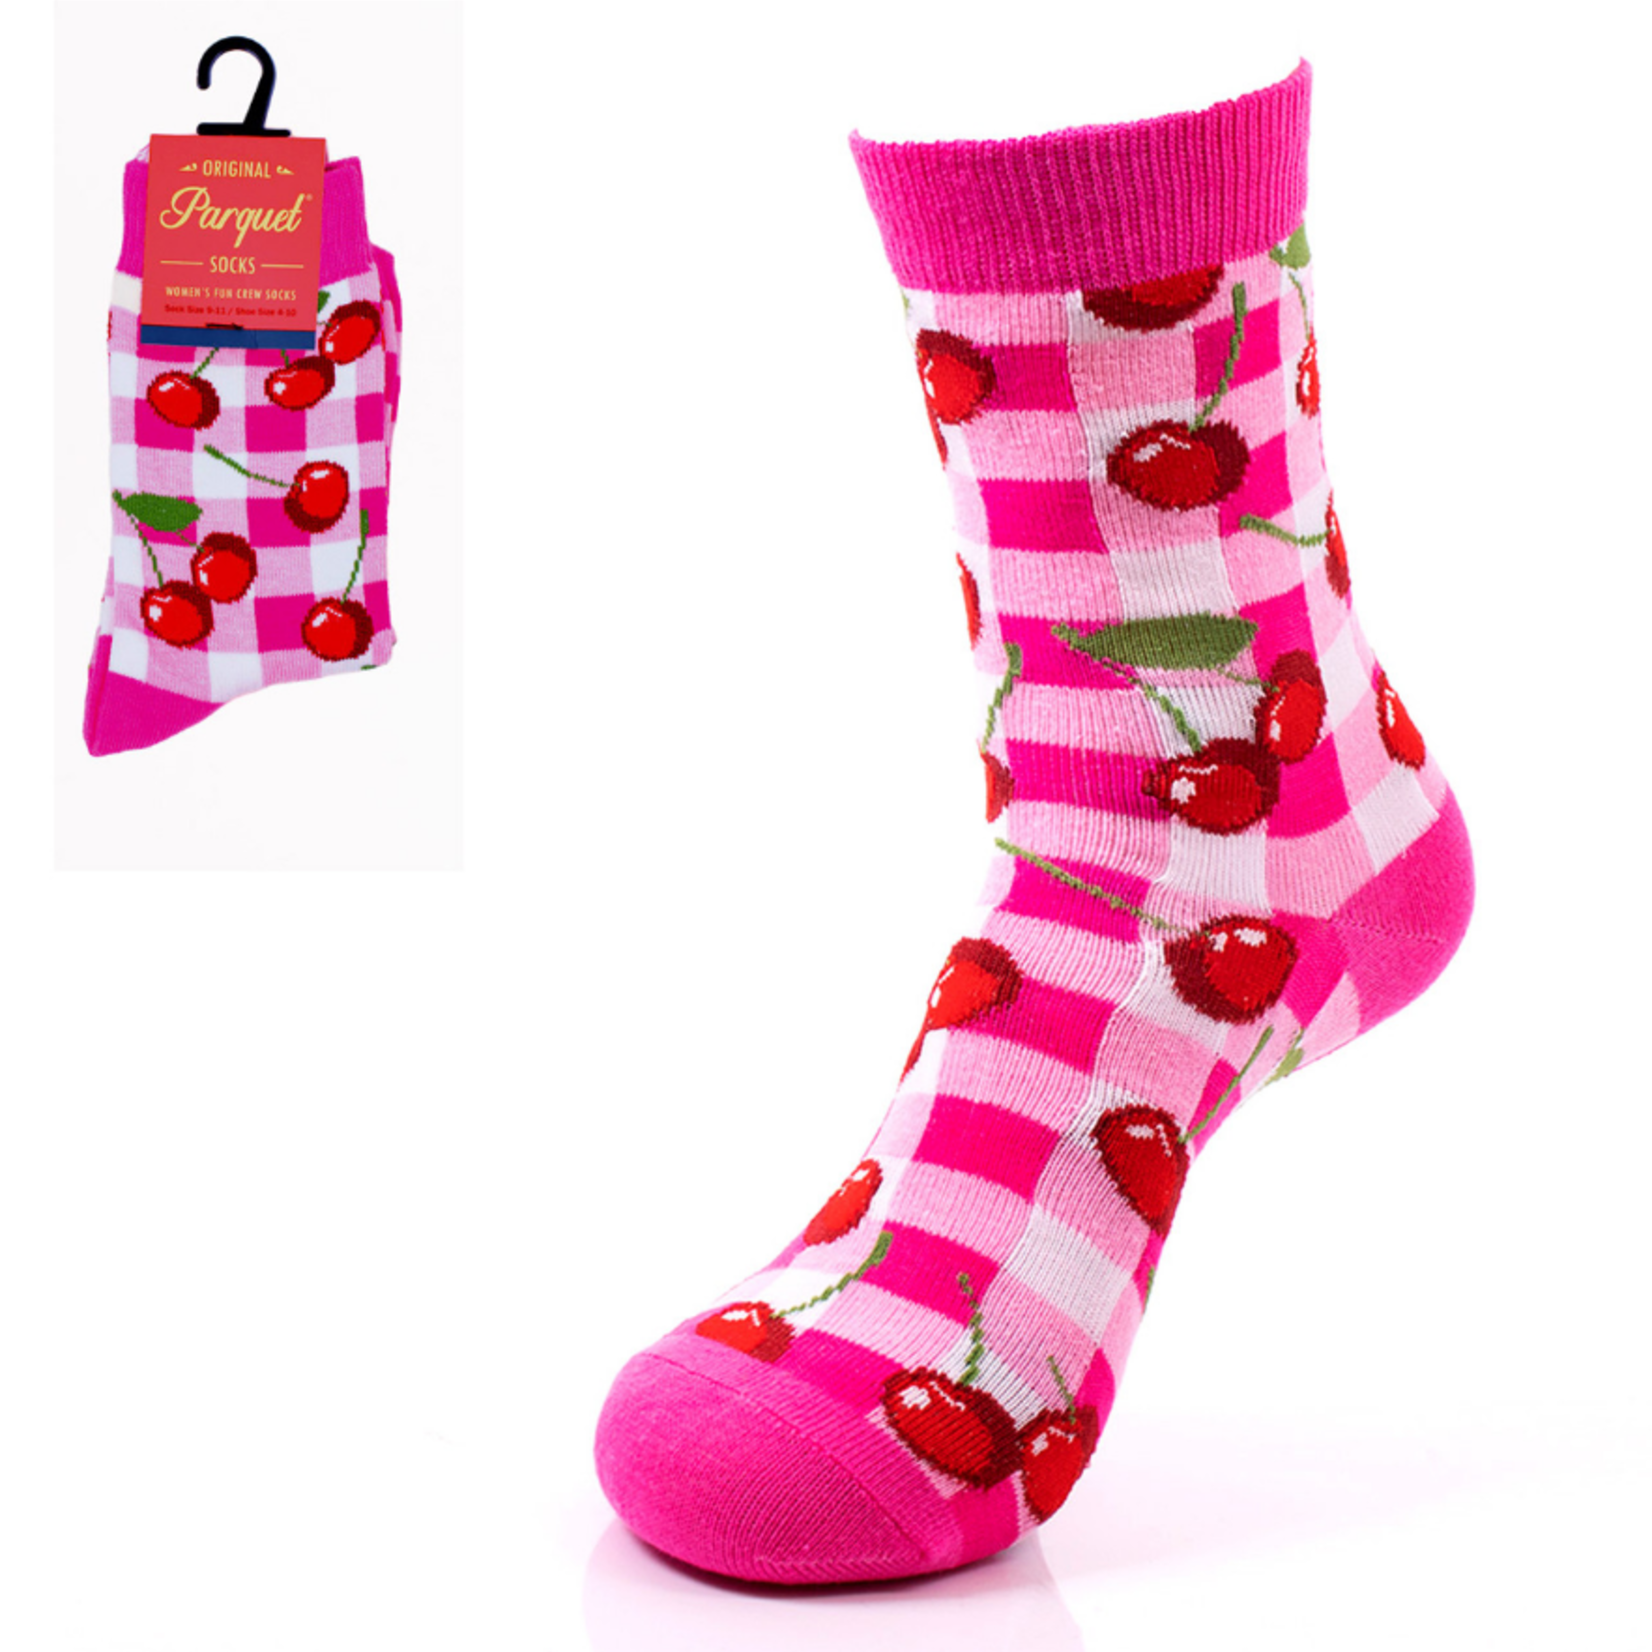 Selini Women's Cherry Socks